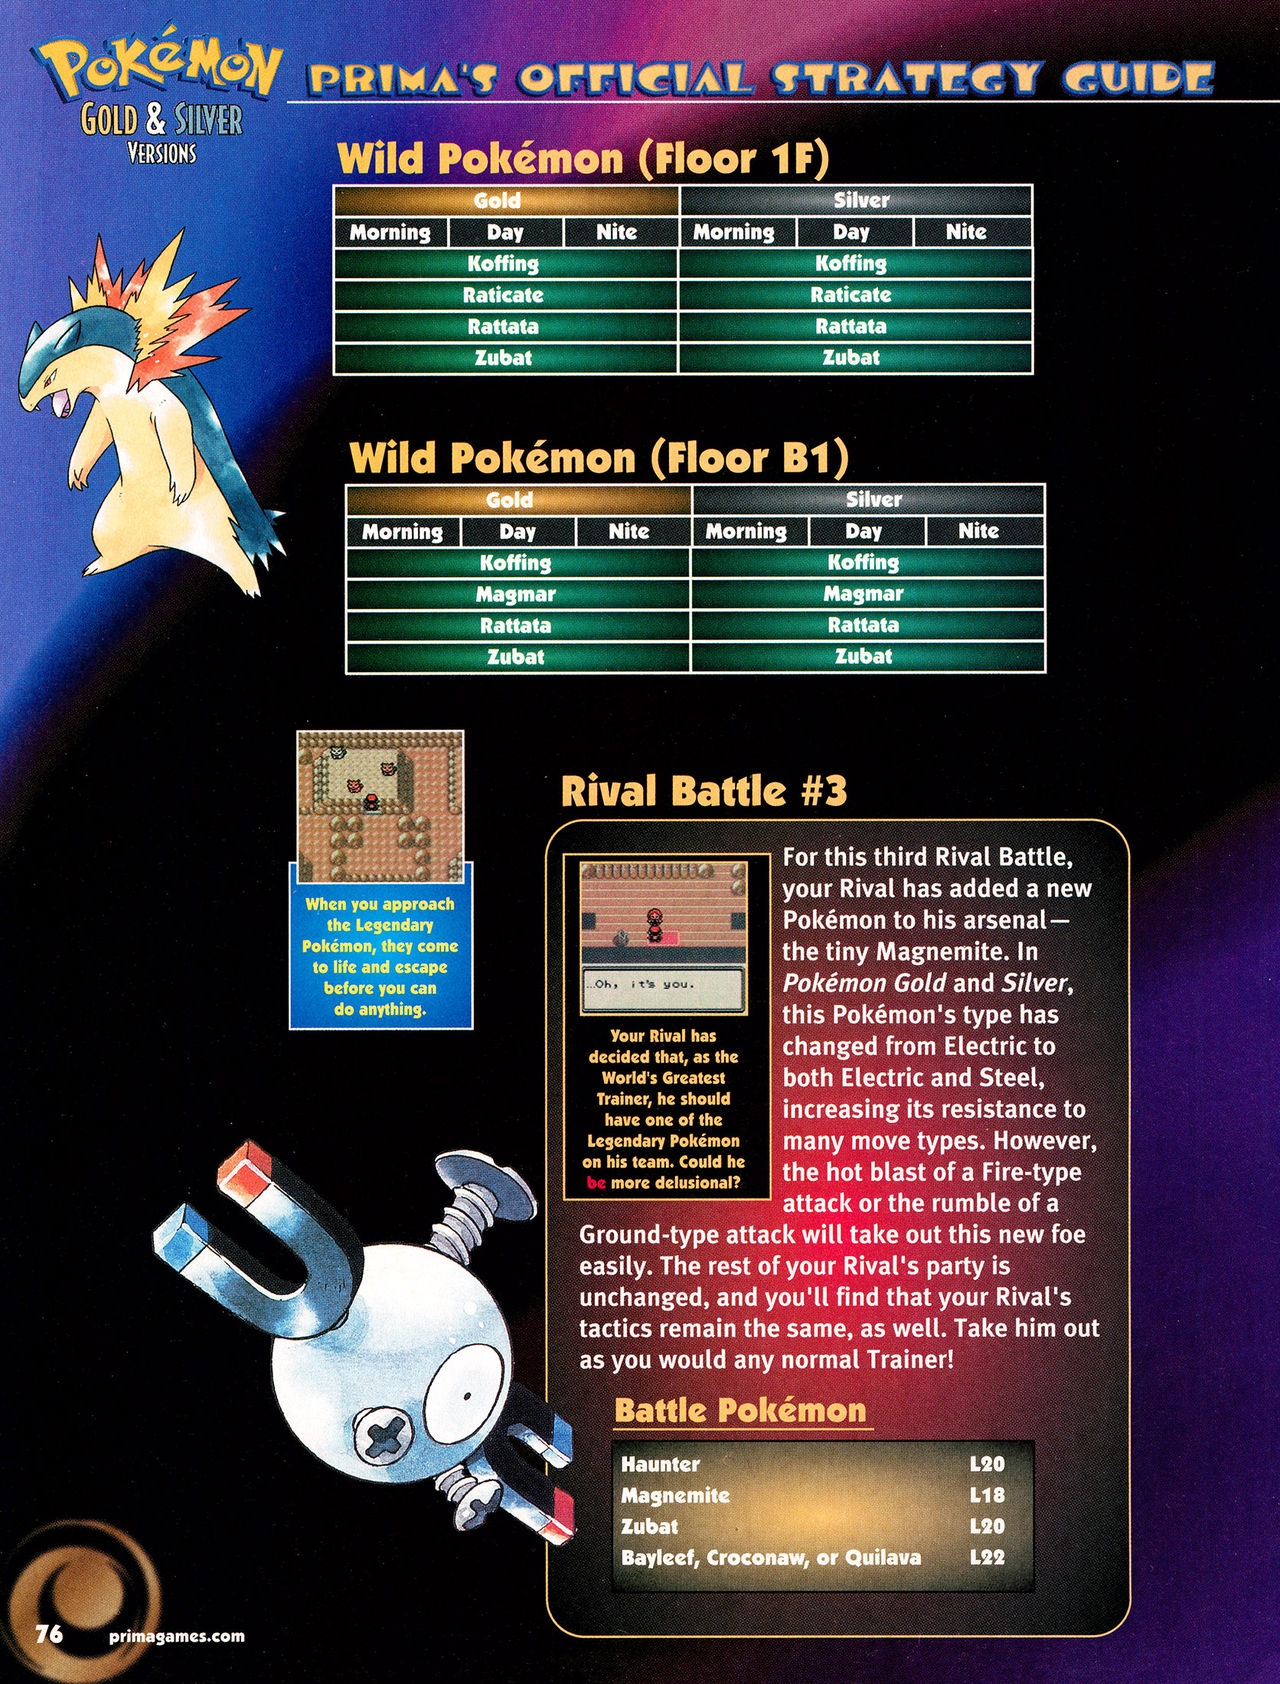 Pokémon Gold & Silver Versions - Strategy Guide 77